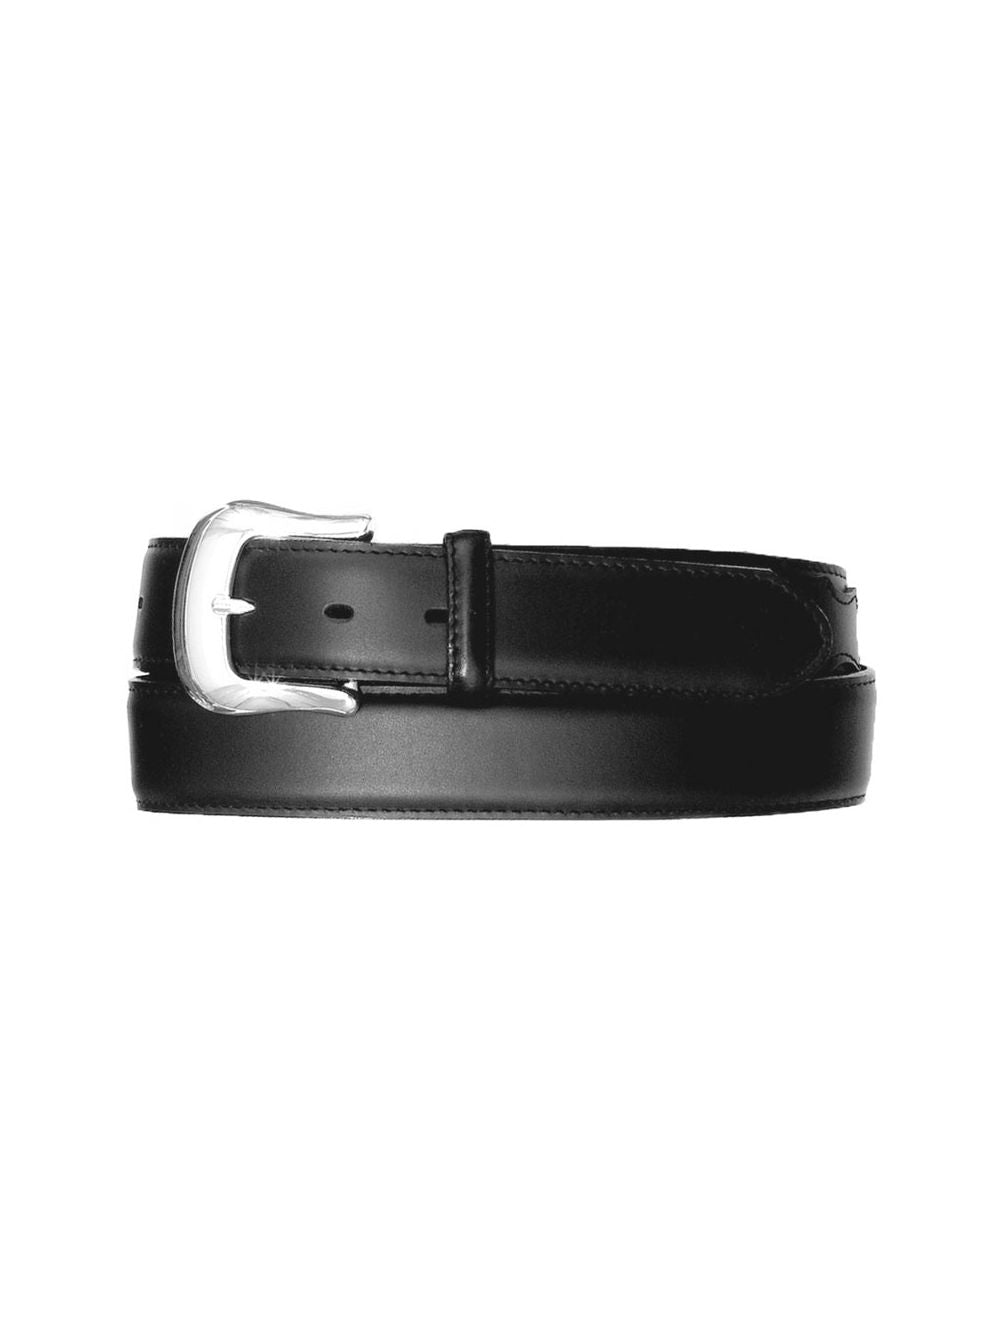 Tony Lama Men's Longhorn Black Leather Belt